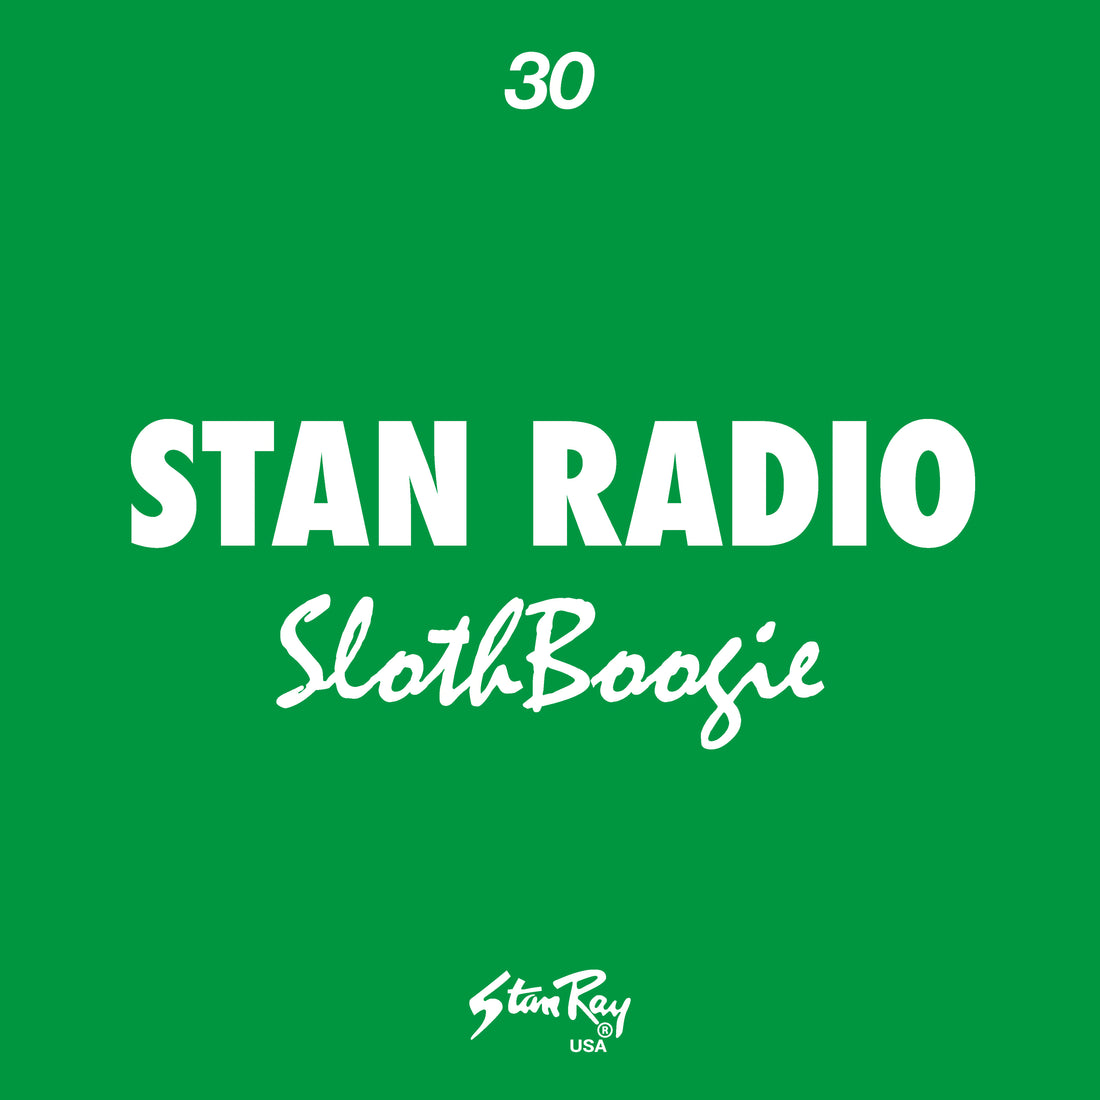 Stan Radio 30 - SlothBoogie